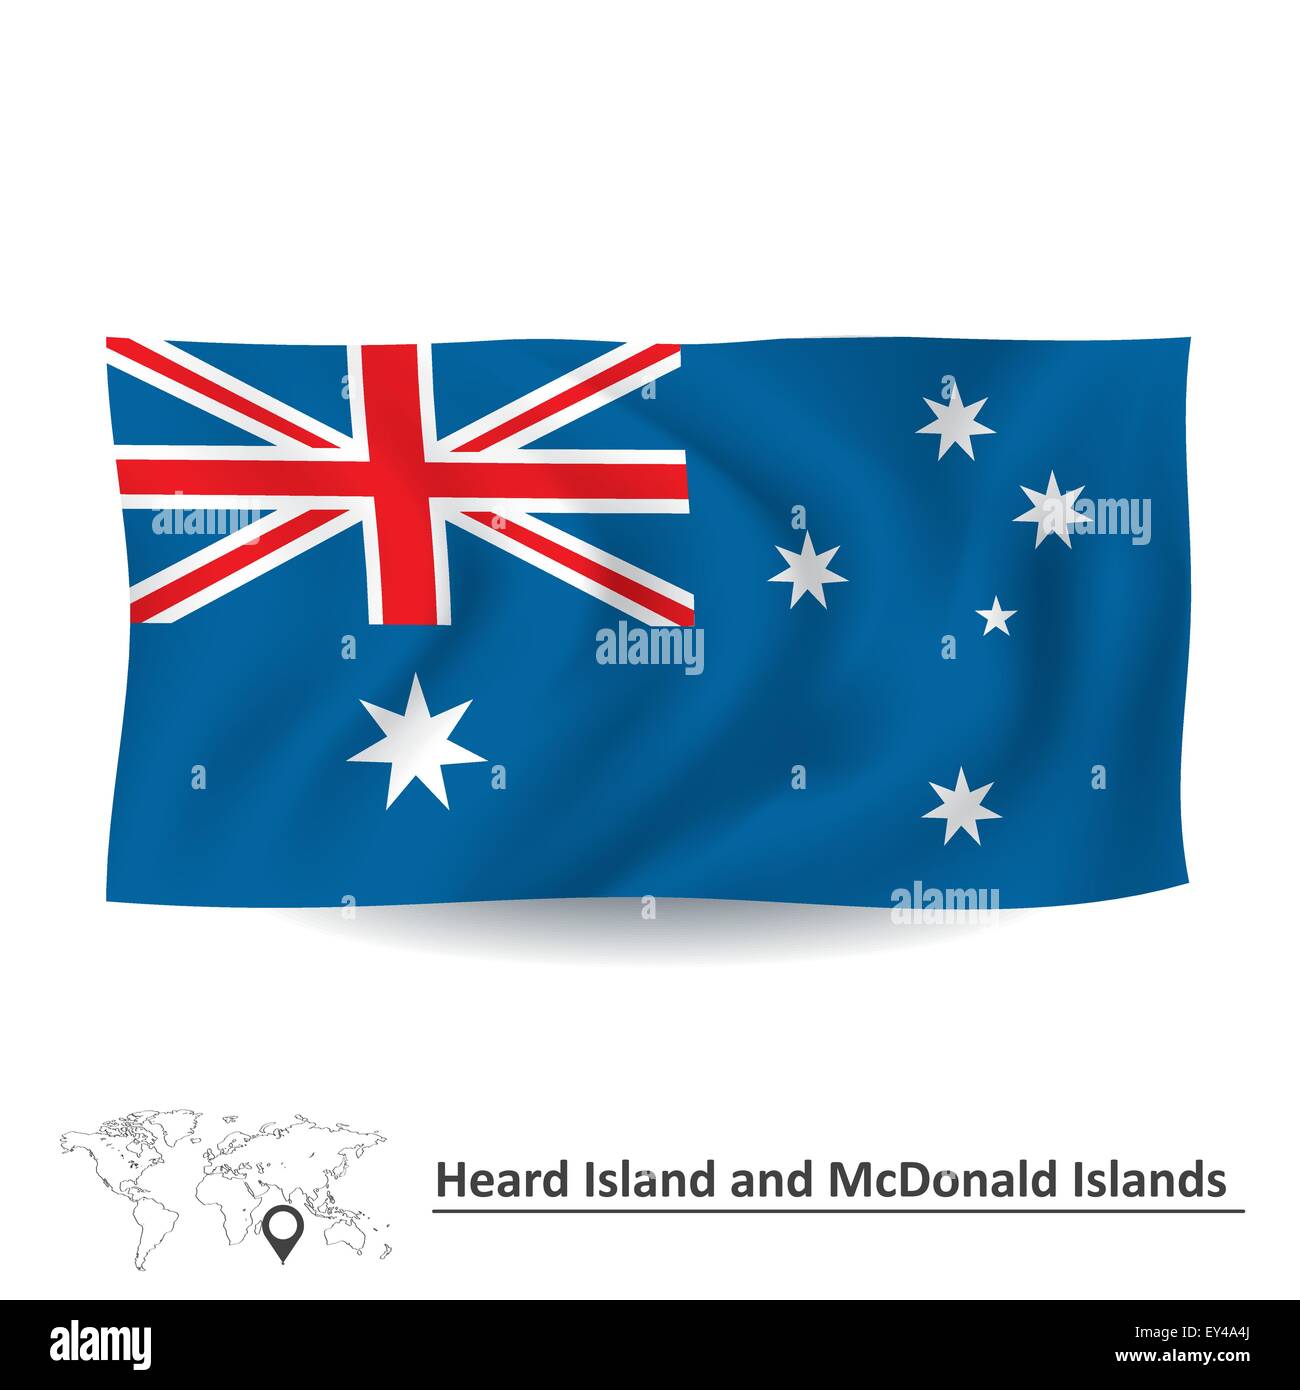 Flag of Heard Island and McDonald Islands - vector illustration Stock Vector